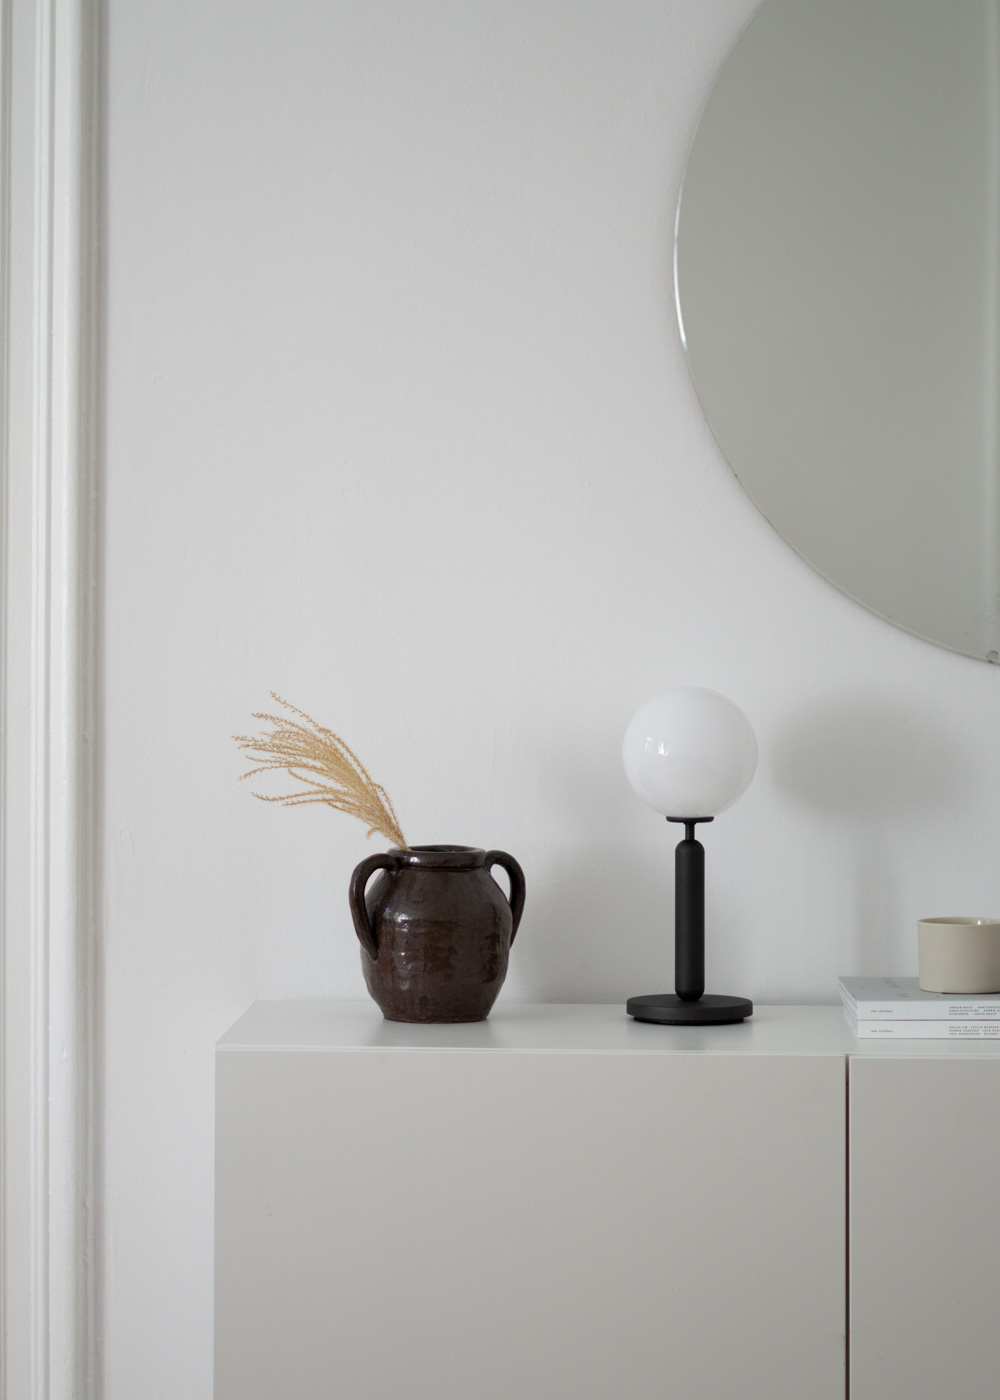 Nuura Lighting, Danish Design, Glass Table Lamp, Miira, Minimalist Home, Classic Interior, Timeless Style, Round Mirror, White Scandinavian Decor, Neutral Aesthetic